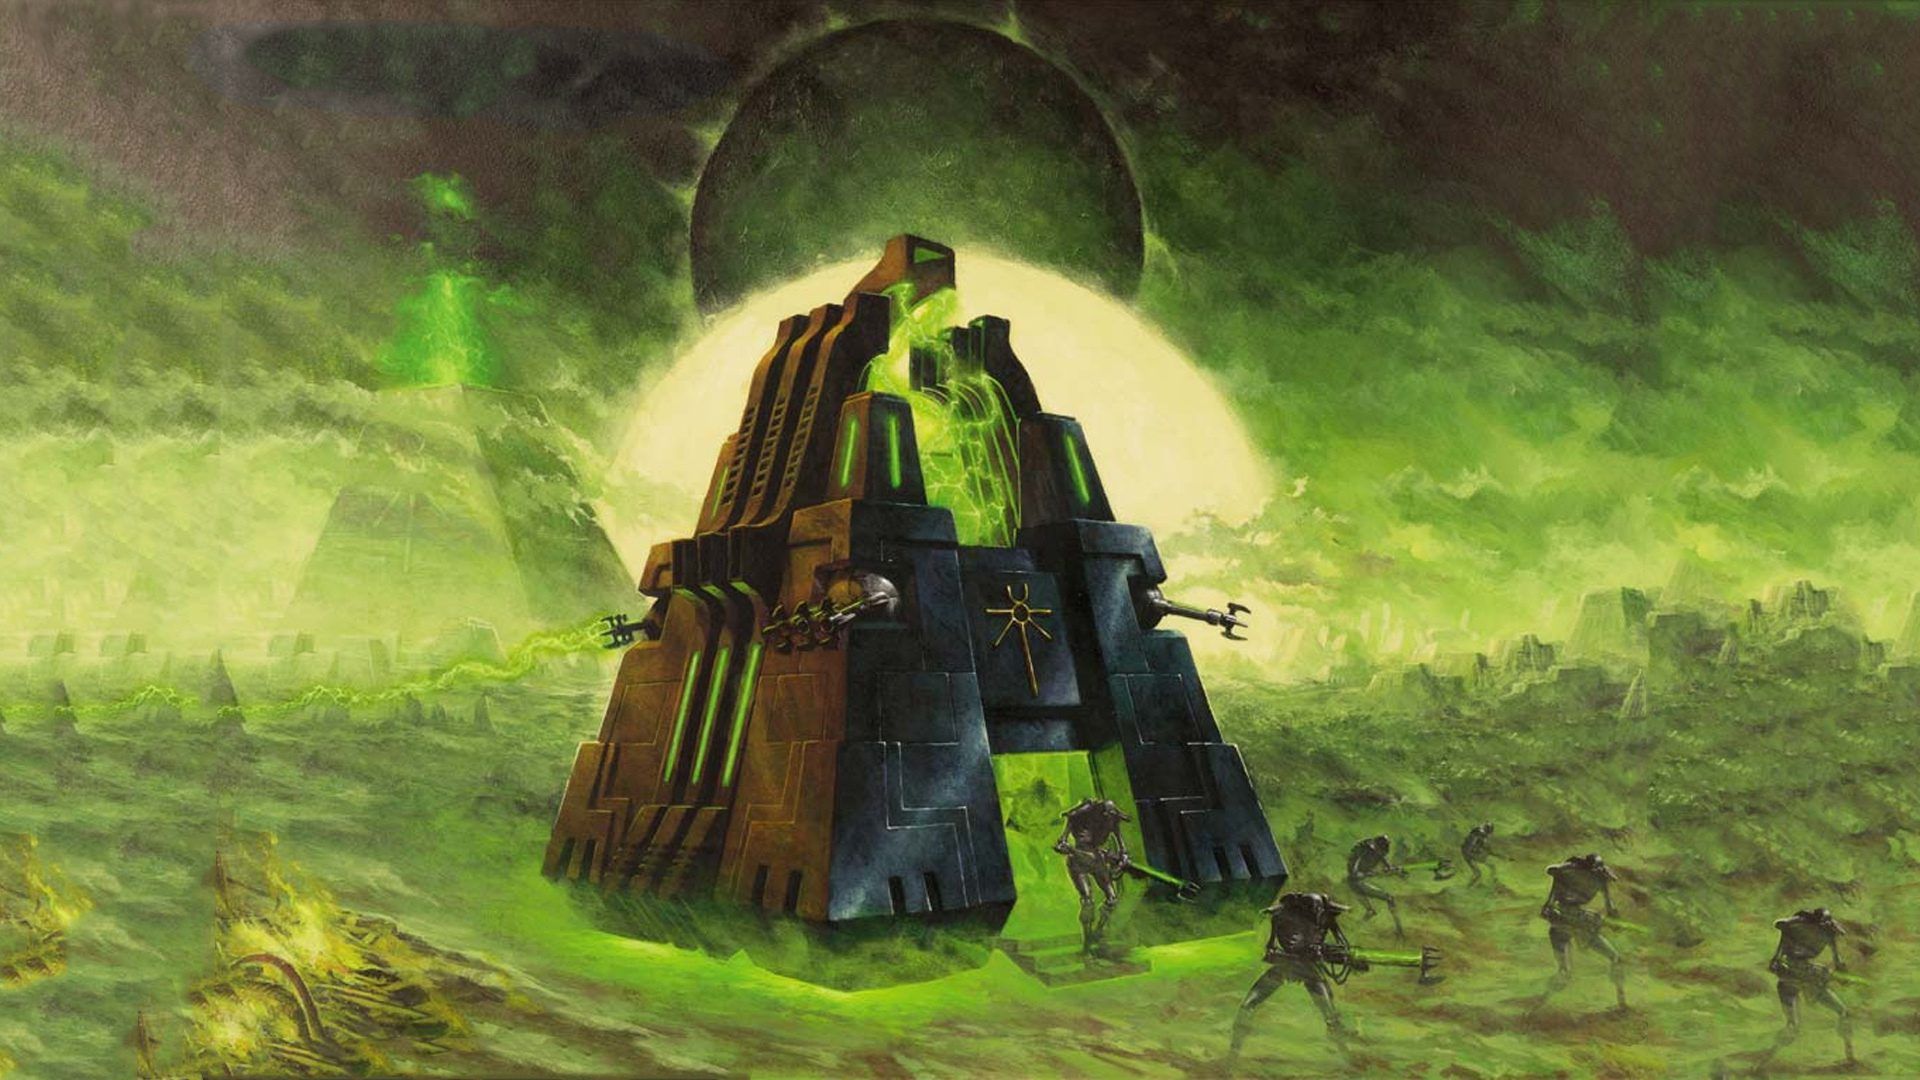 Free download HD wallpaper of Warhammer 40k image of monolith